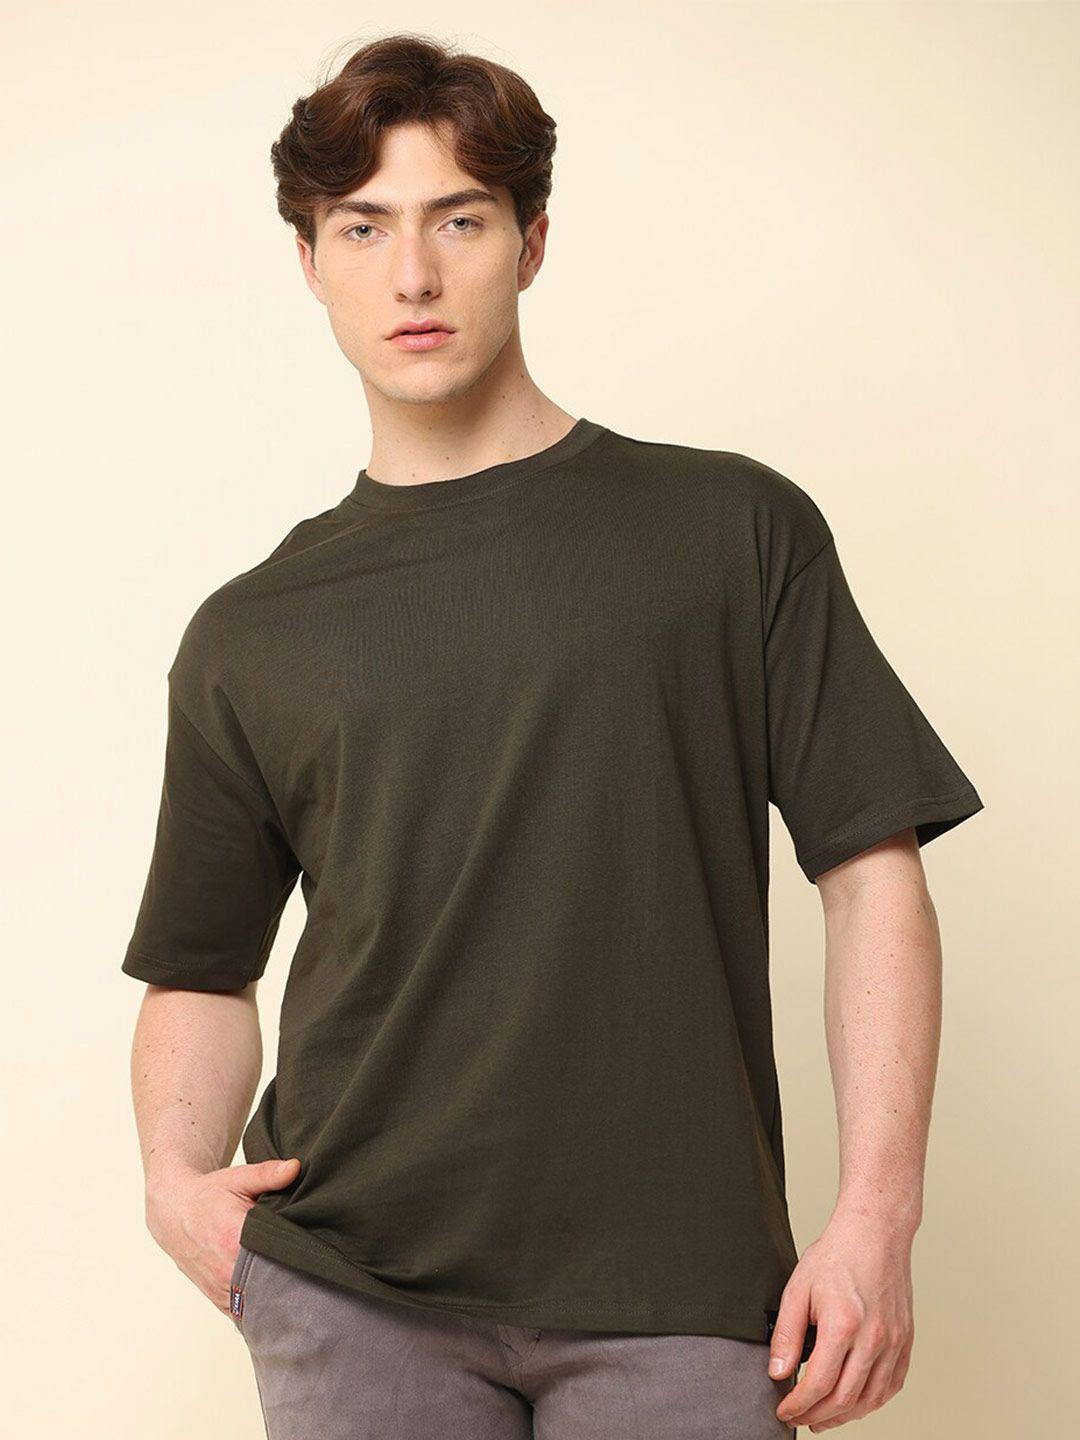 silisoul drop-shoulder sleeves bio finish pure cotton oversized t-shirt